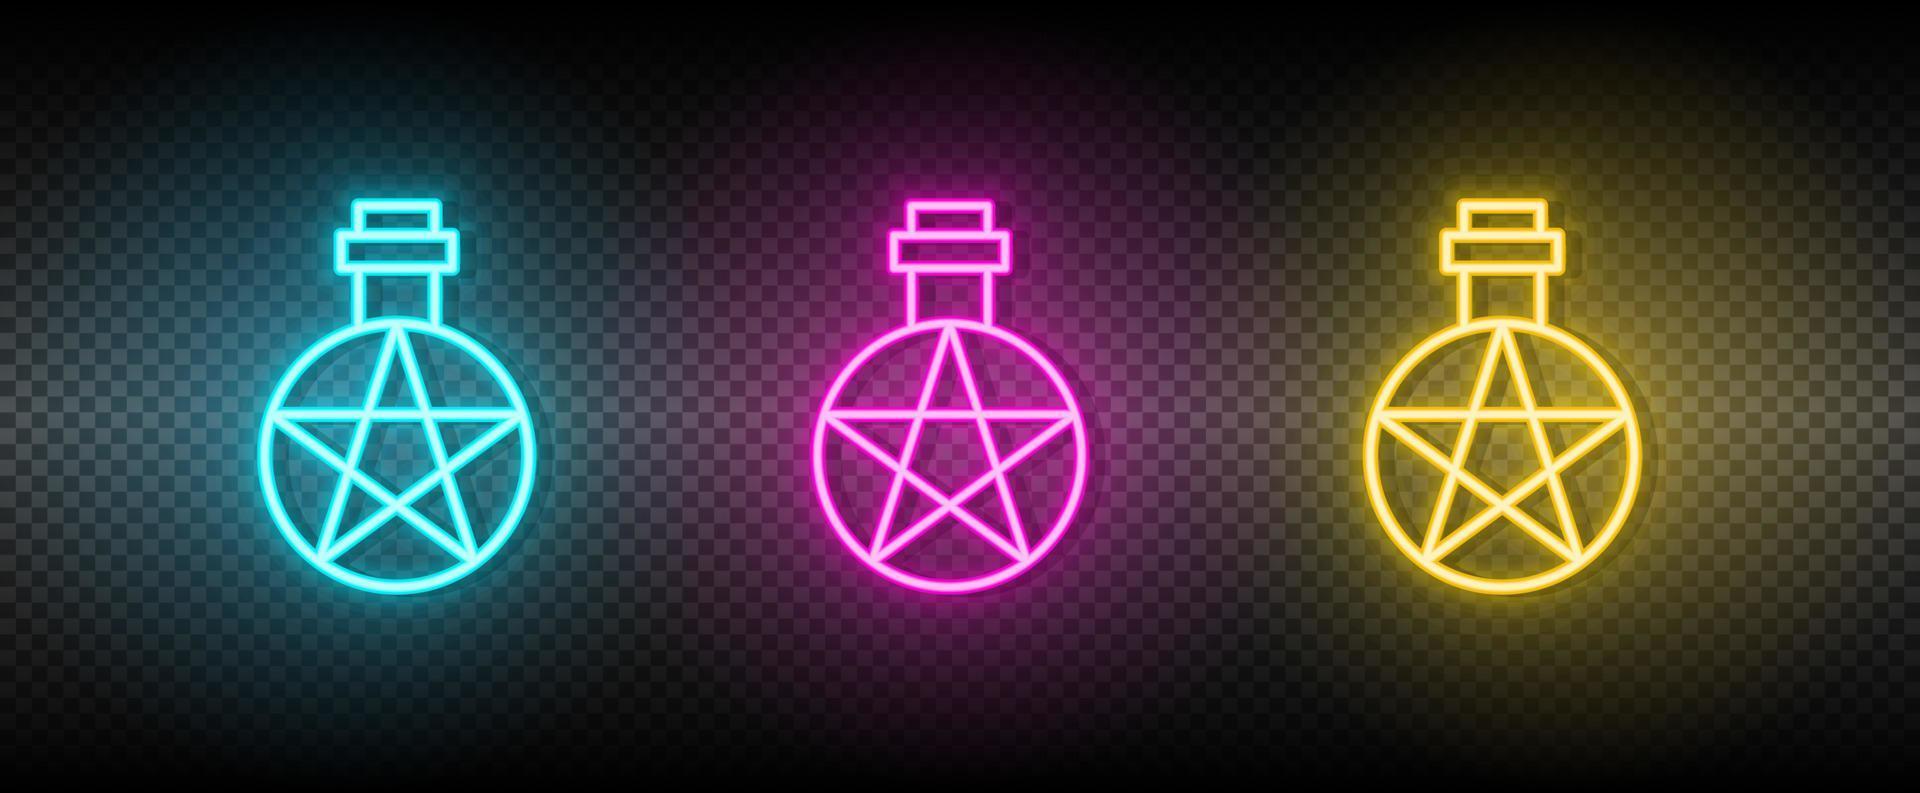 Alchemy symbol neon vector icon.